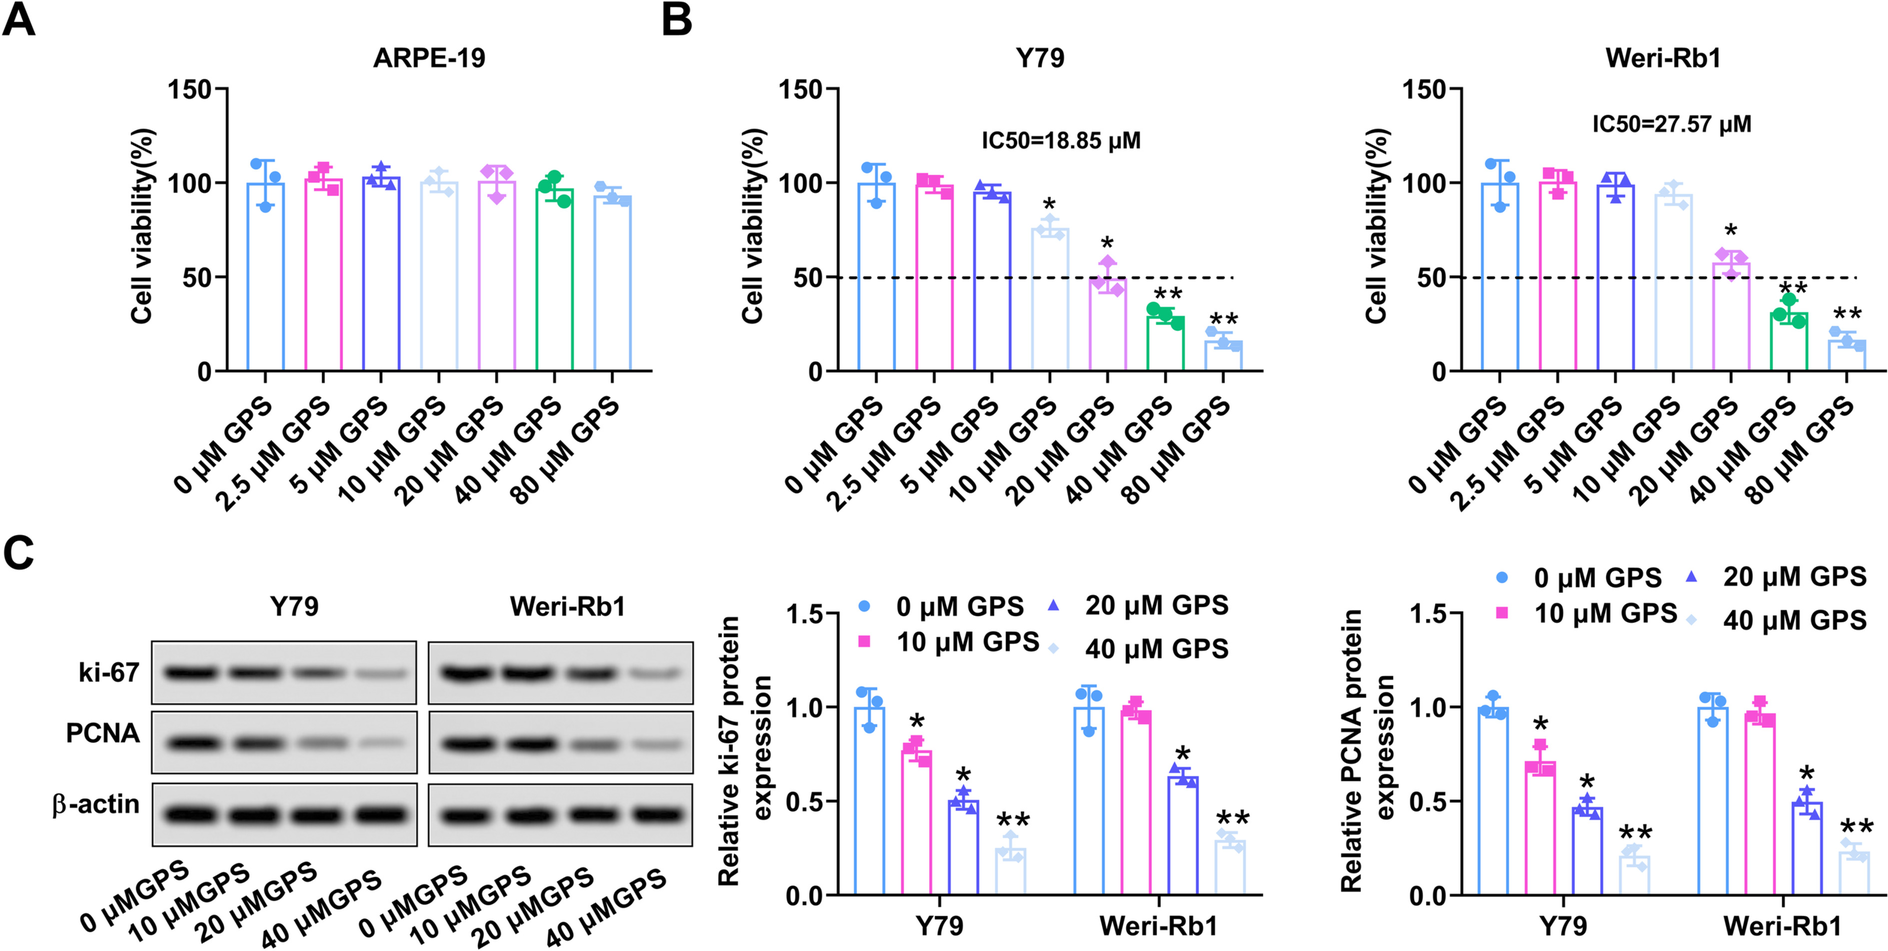 Gentiopicroside inhibits retinoblastoma cell proliferation, invasion, and tumorigenesis in nude mice by suppressing the PI3K/AKT pathway